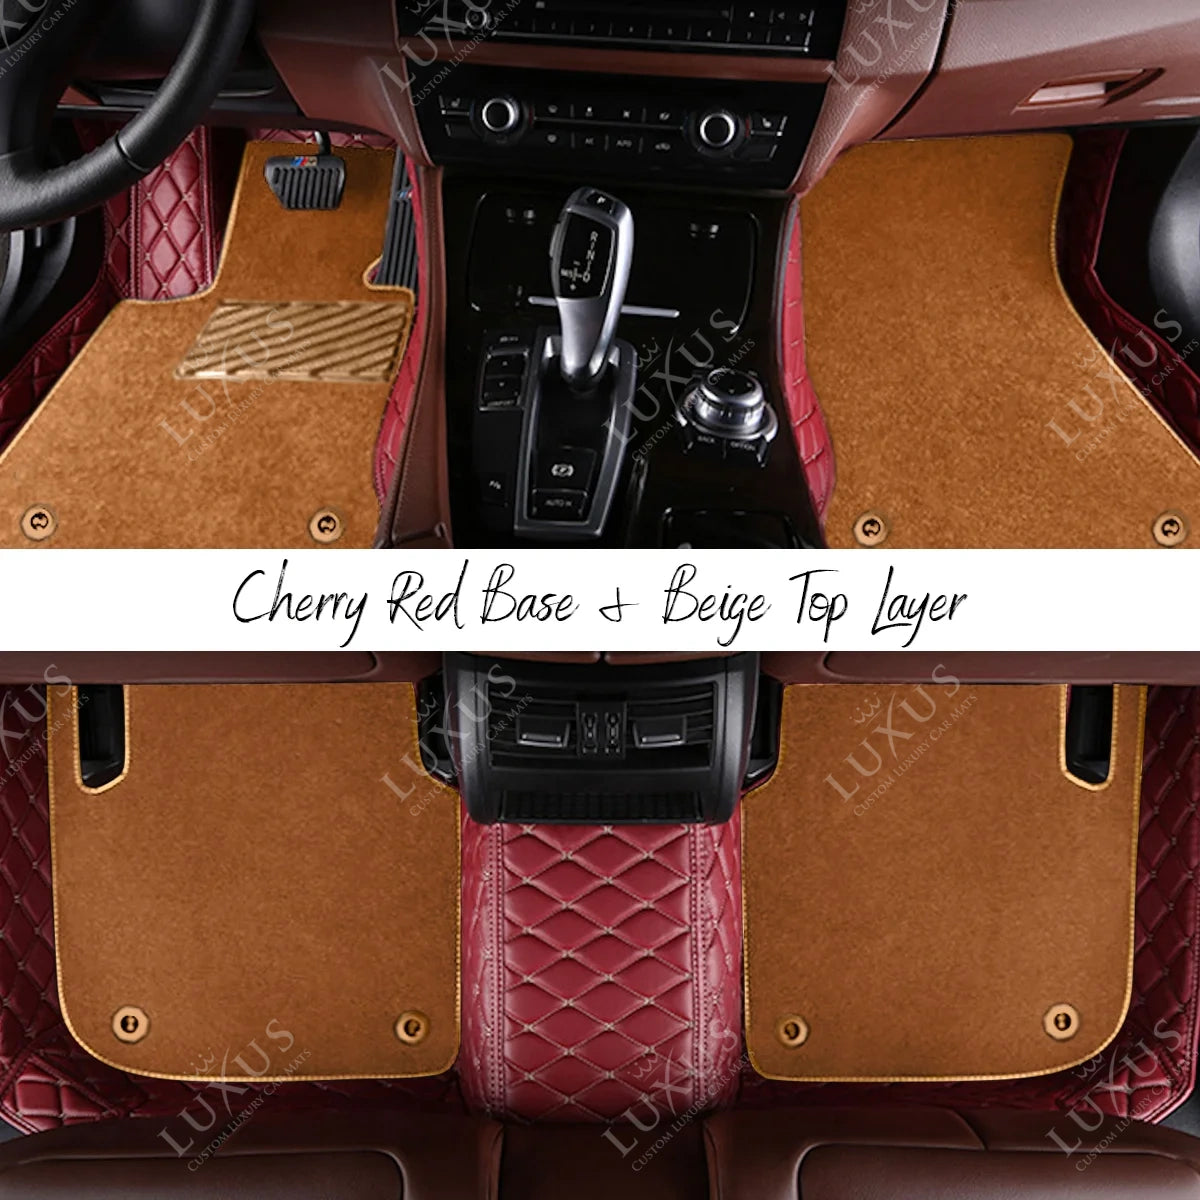 Cherry Red Diamond Base & Beige Top Carpet Double Layer Luxury Car Mats Set